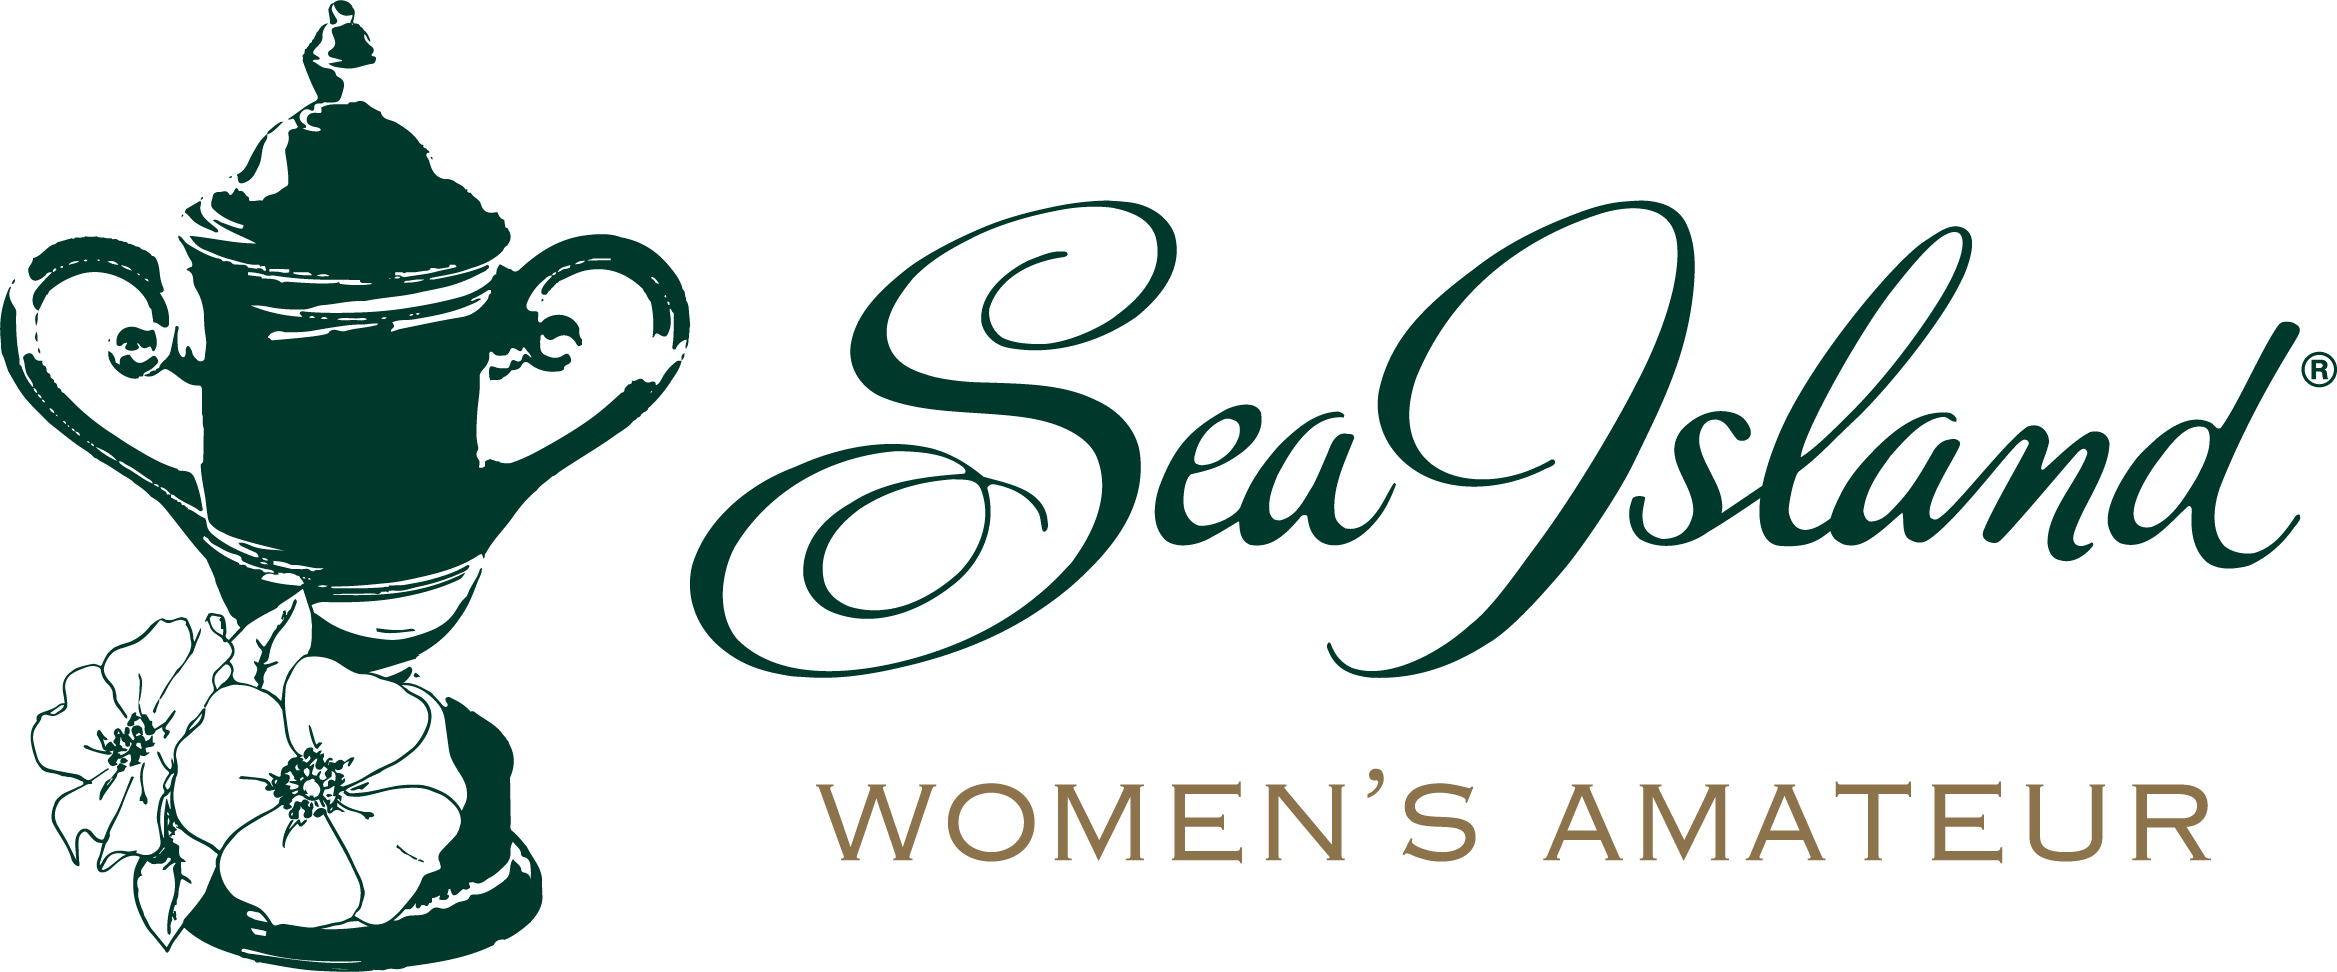 Sea Island Women’s Amateur